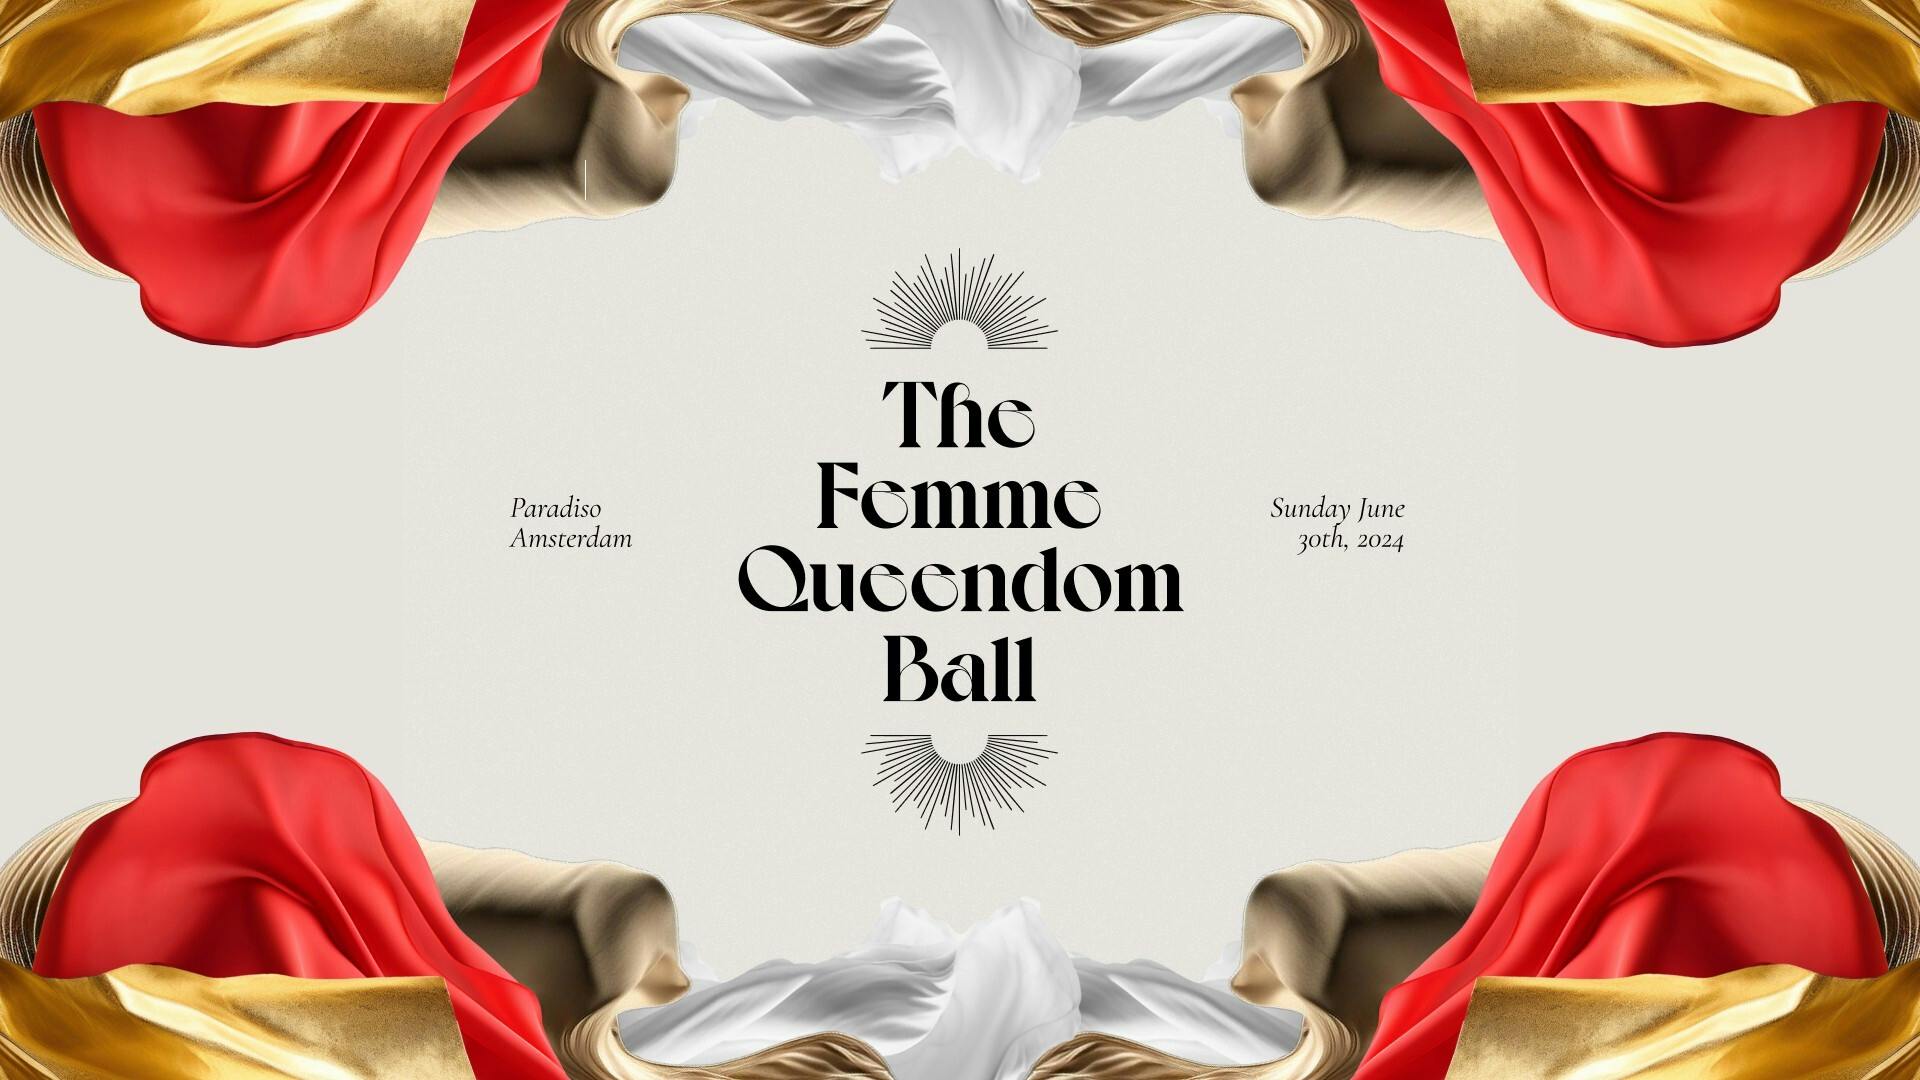 The Femme Queendom Ball